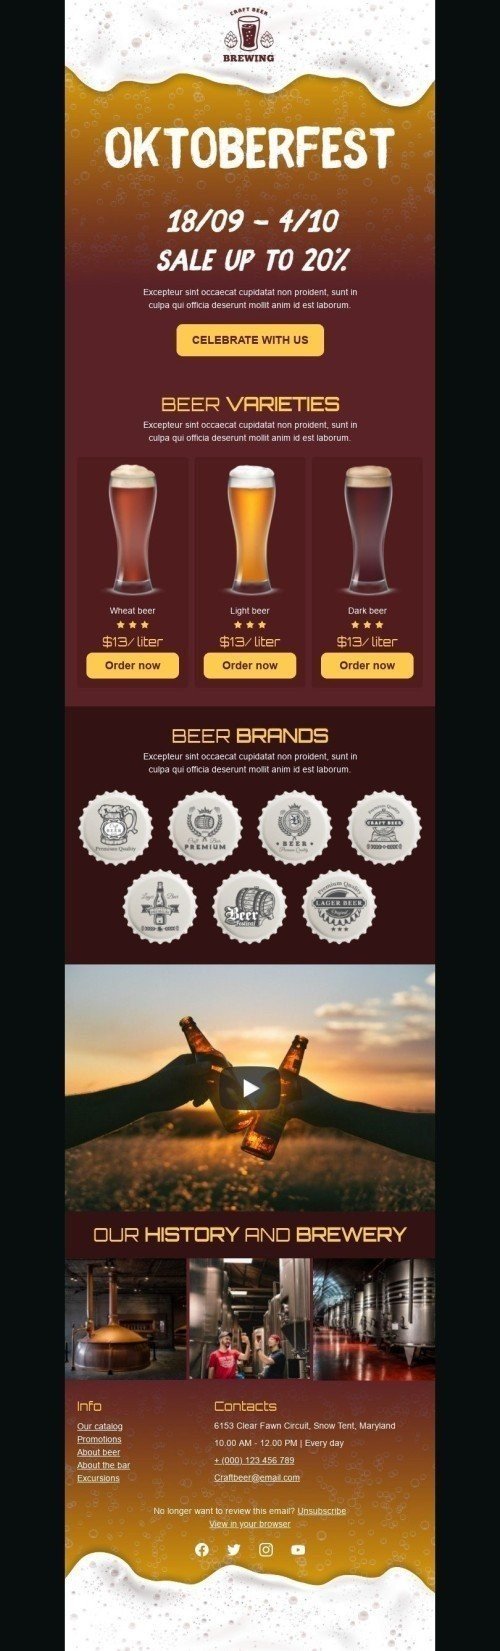 Oktoberfest Email Template «Craft beer» for Beverages industry desktop view